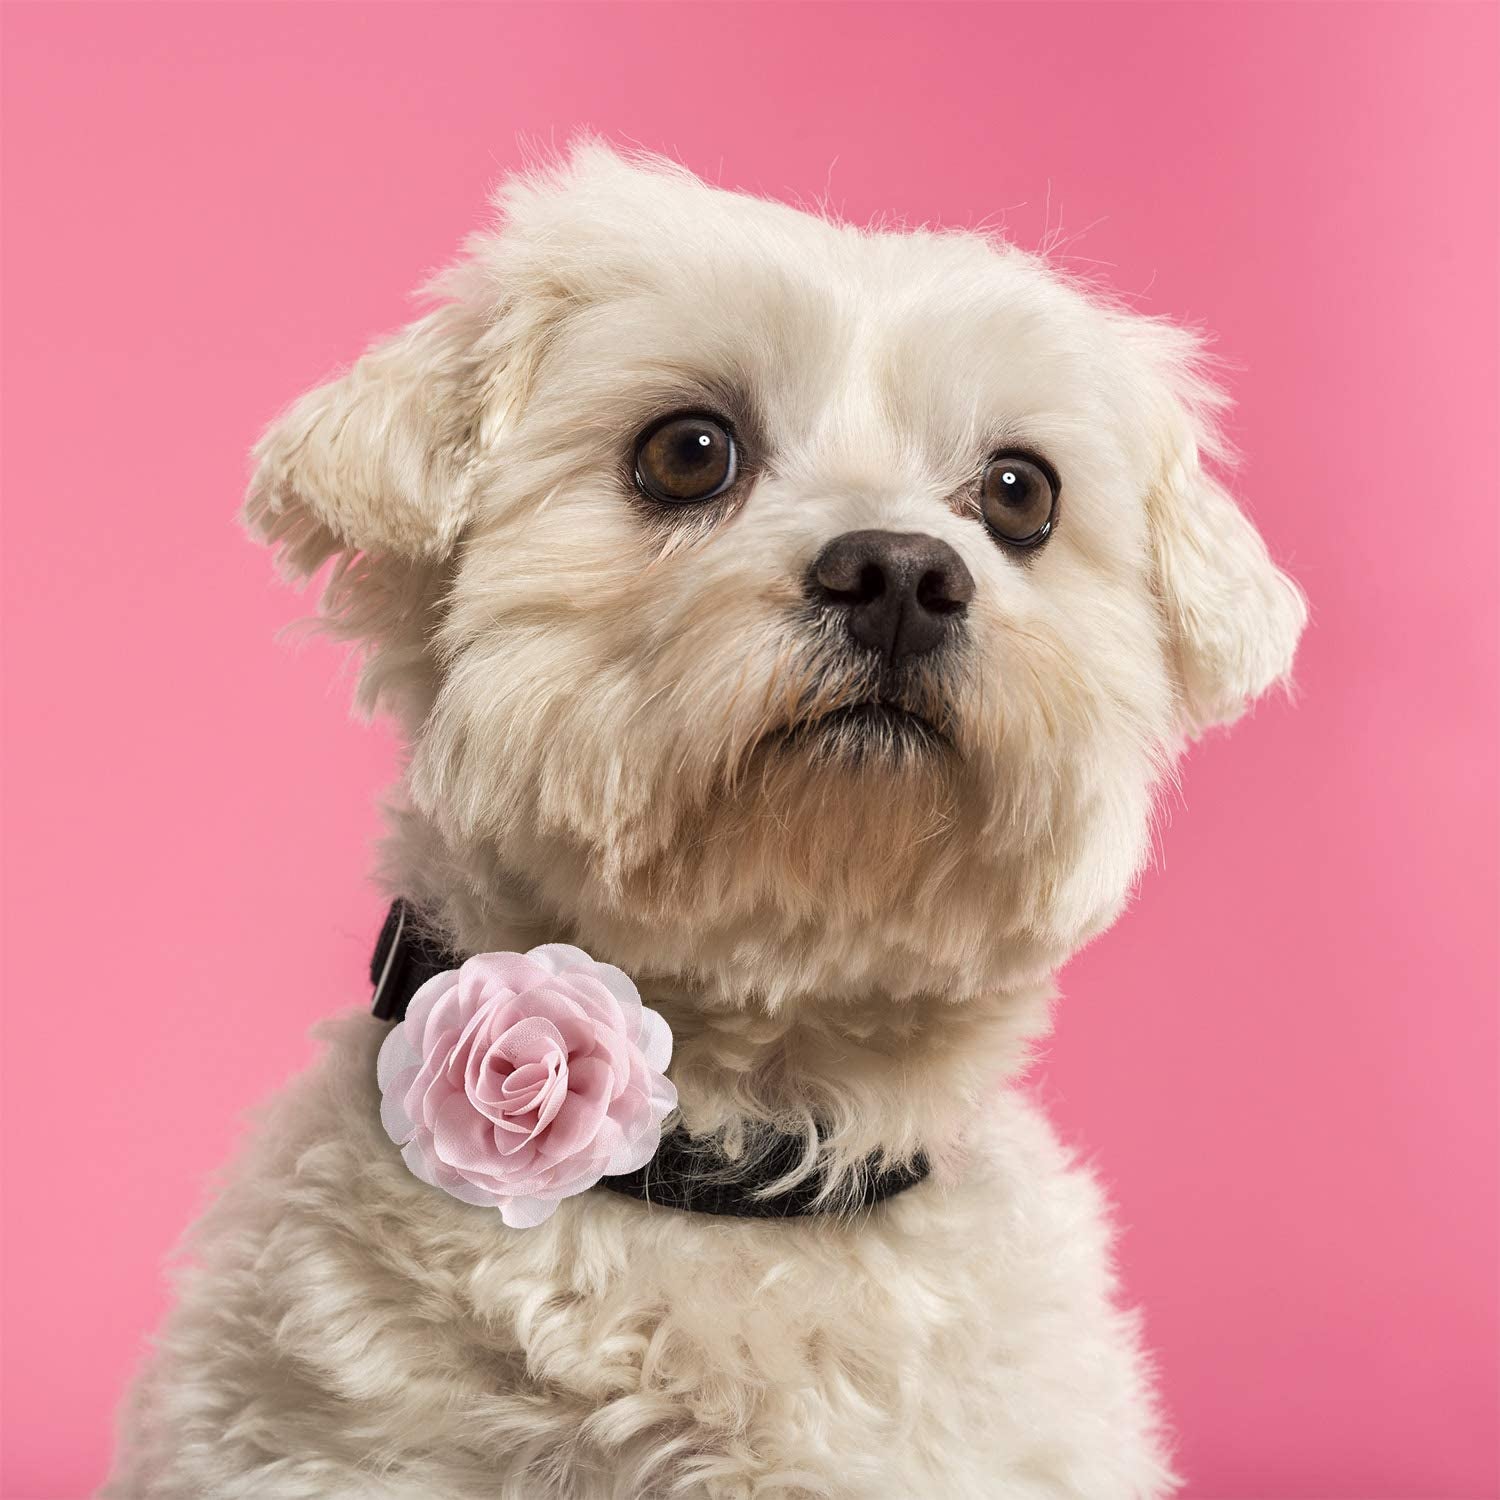 Leinuosen 20 Pieces Dog Collar Flowers Pet Bow Tie Flower Collars